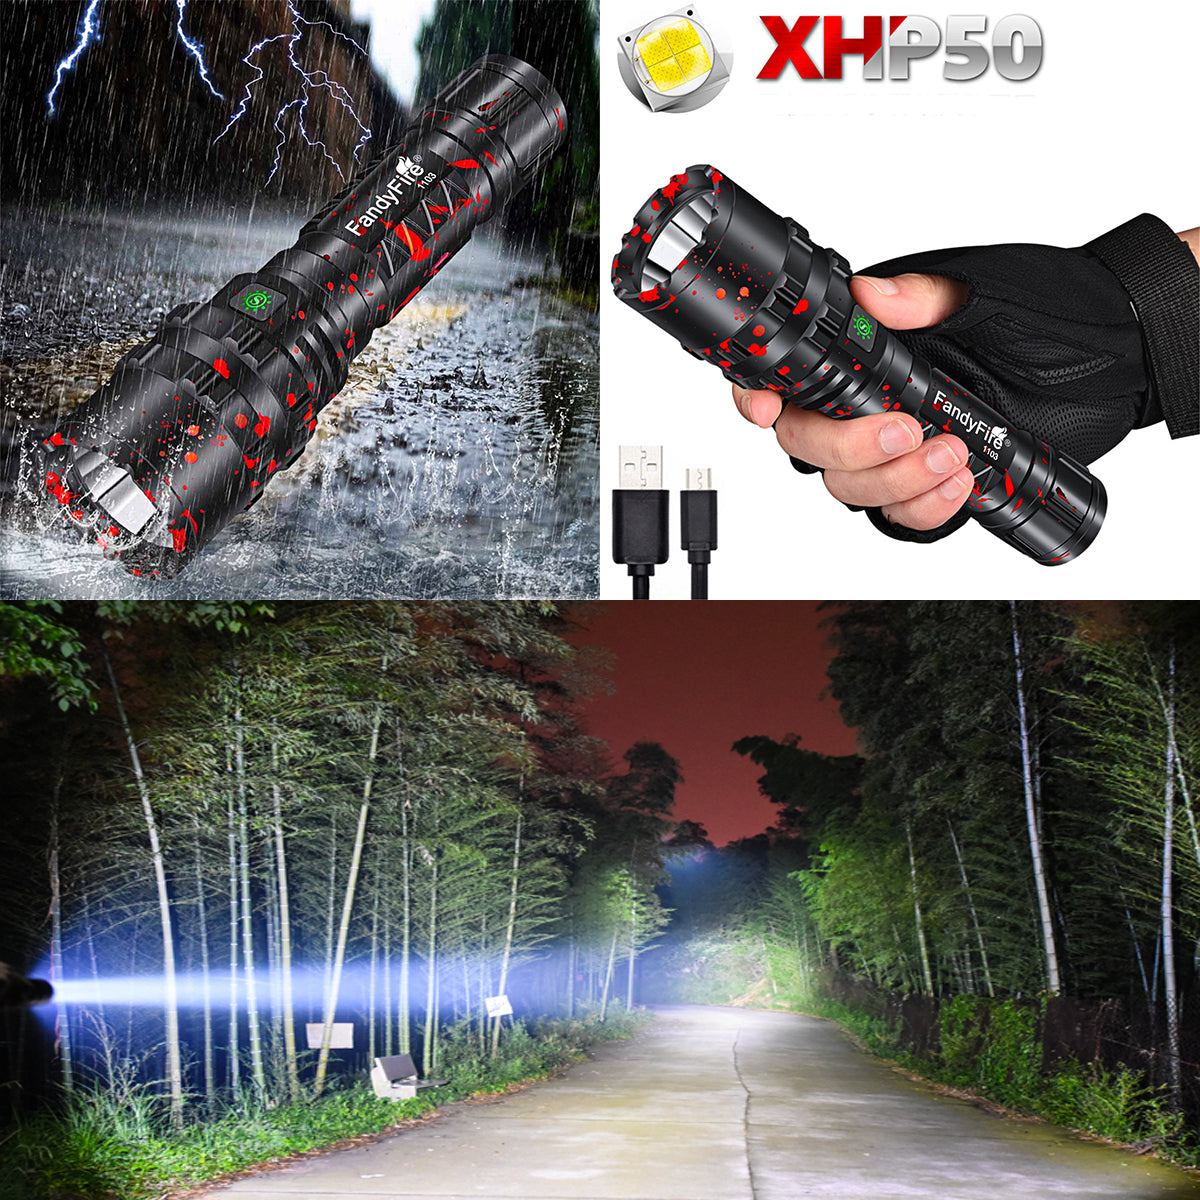 FandyFire XHP-50 Rechargeable LED Torch, 2000 Lumens